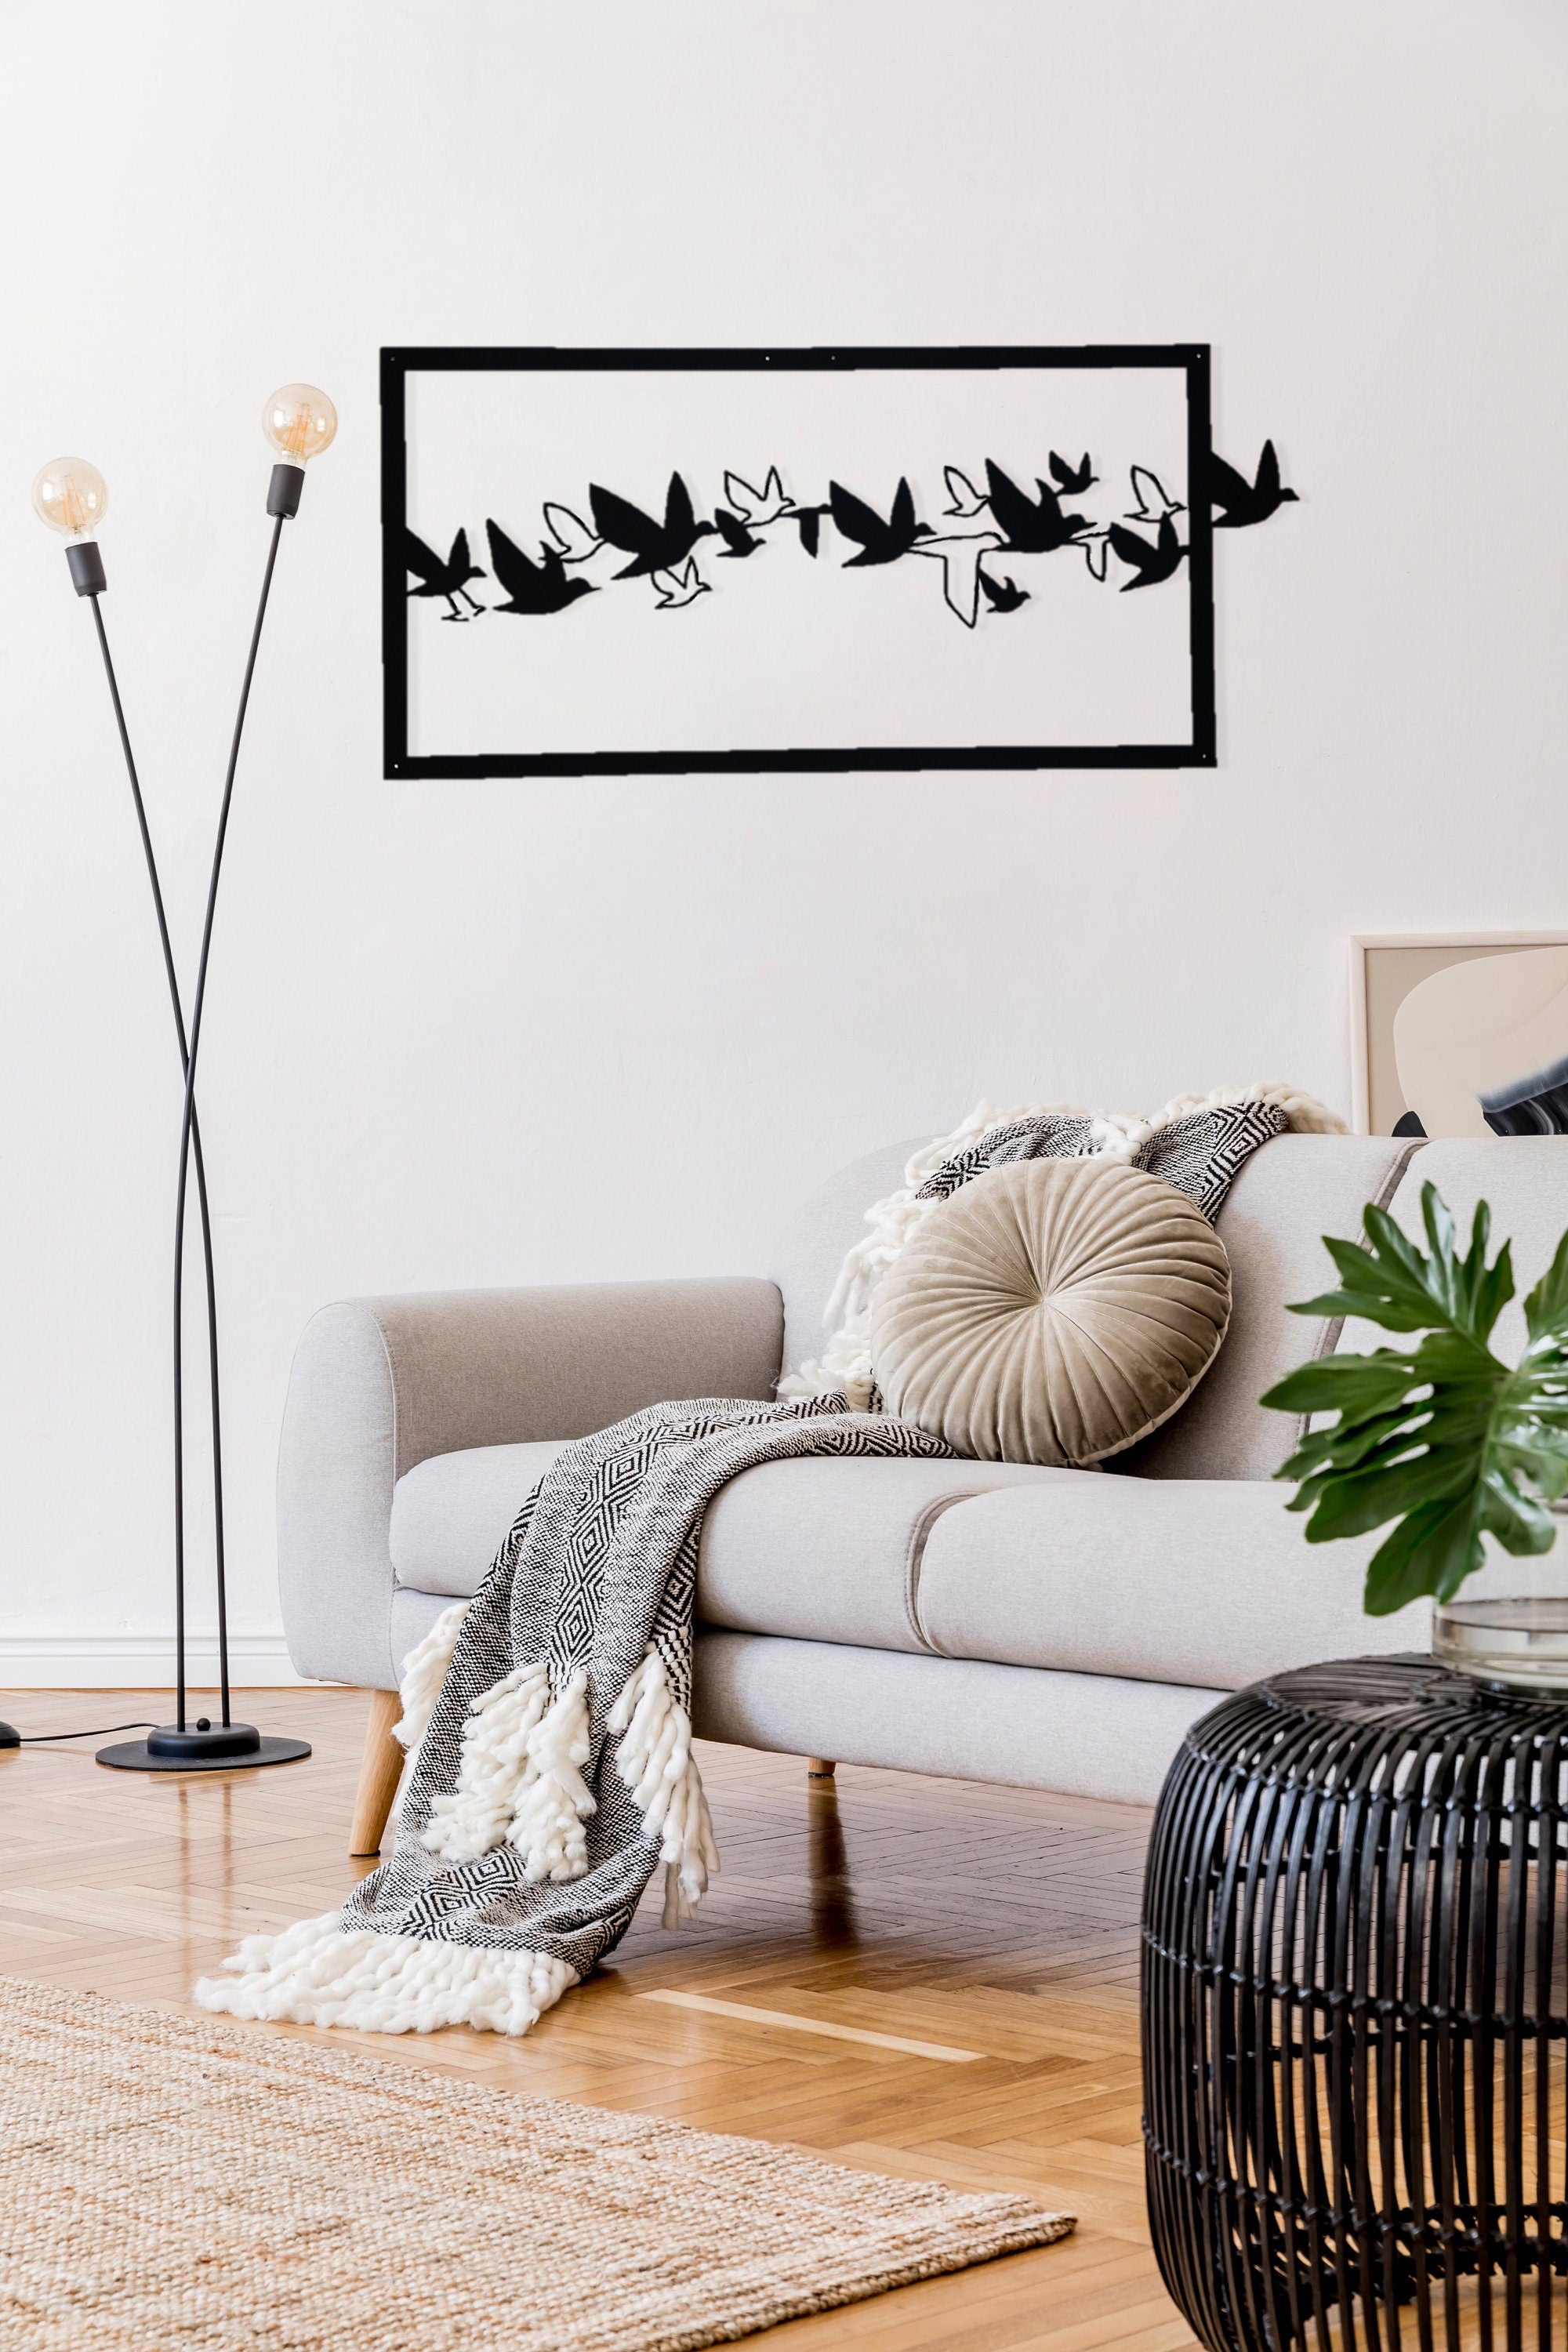 Migratory Birds Decor, Aesthetic Autumn Wall Art, Boho Wall Decor, Modern Living Room Decor, Metal Wall Decor, Gift For Him